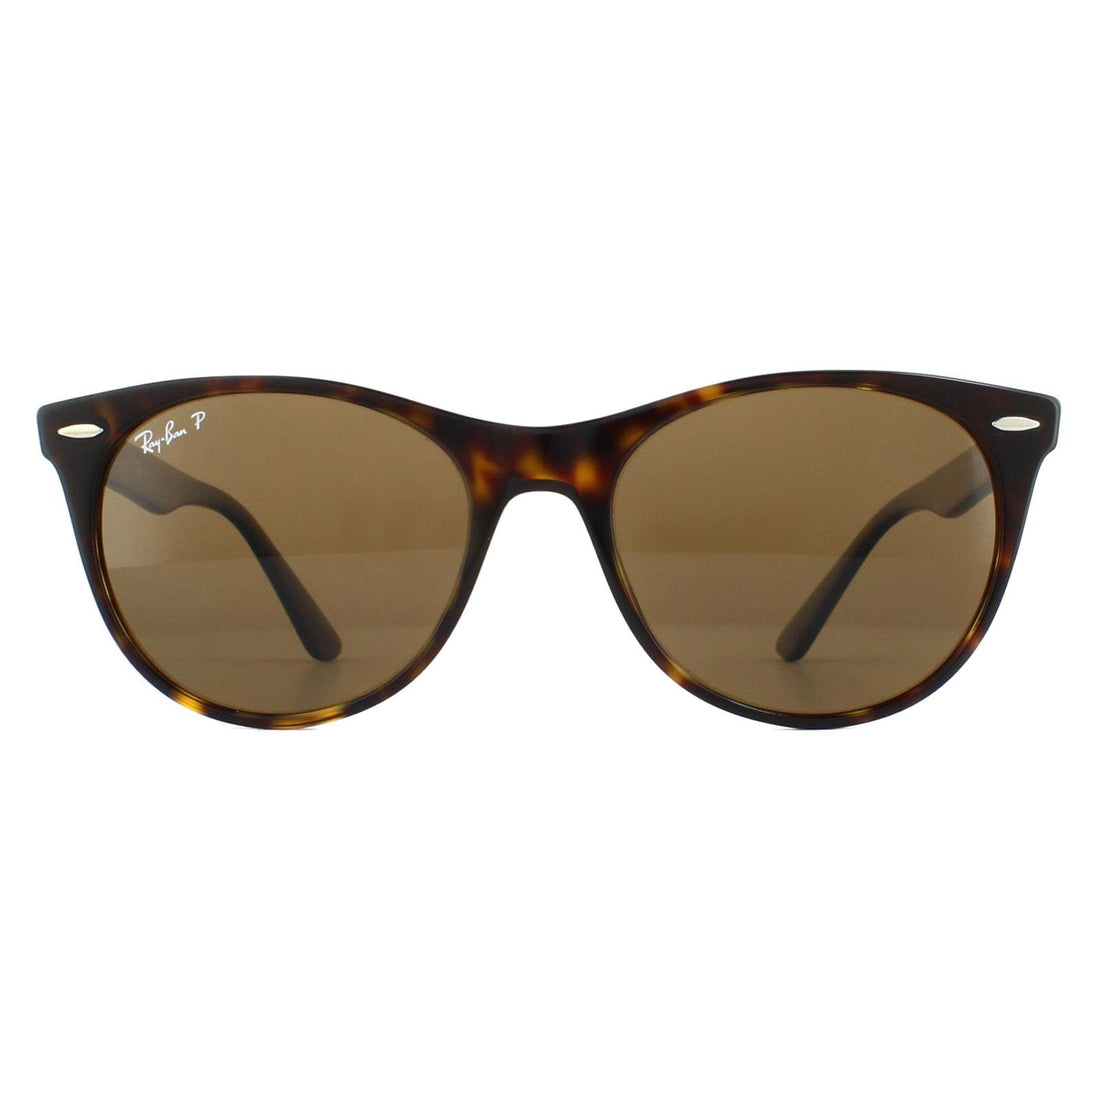 Ray-Ban Sunglasses Wayfarer II RB2185 902/57 Striped Havana Brown Pola –  Discounted Sunglasses